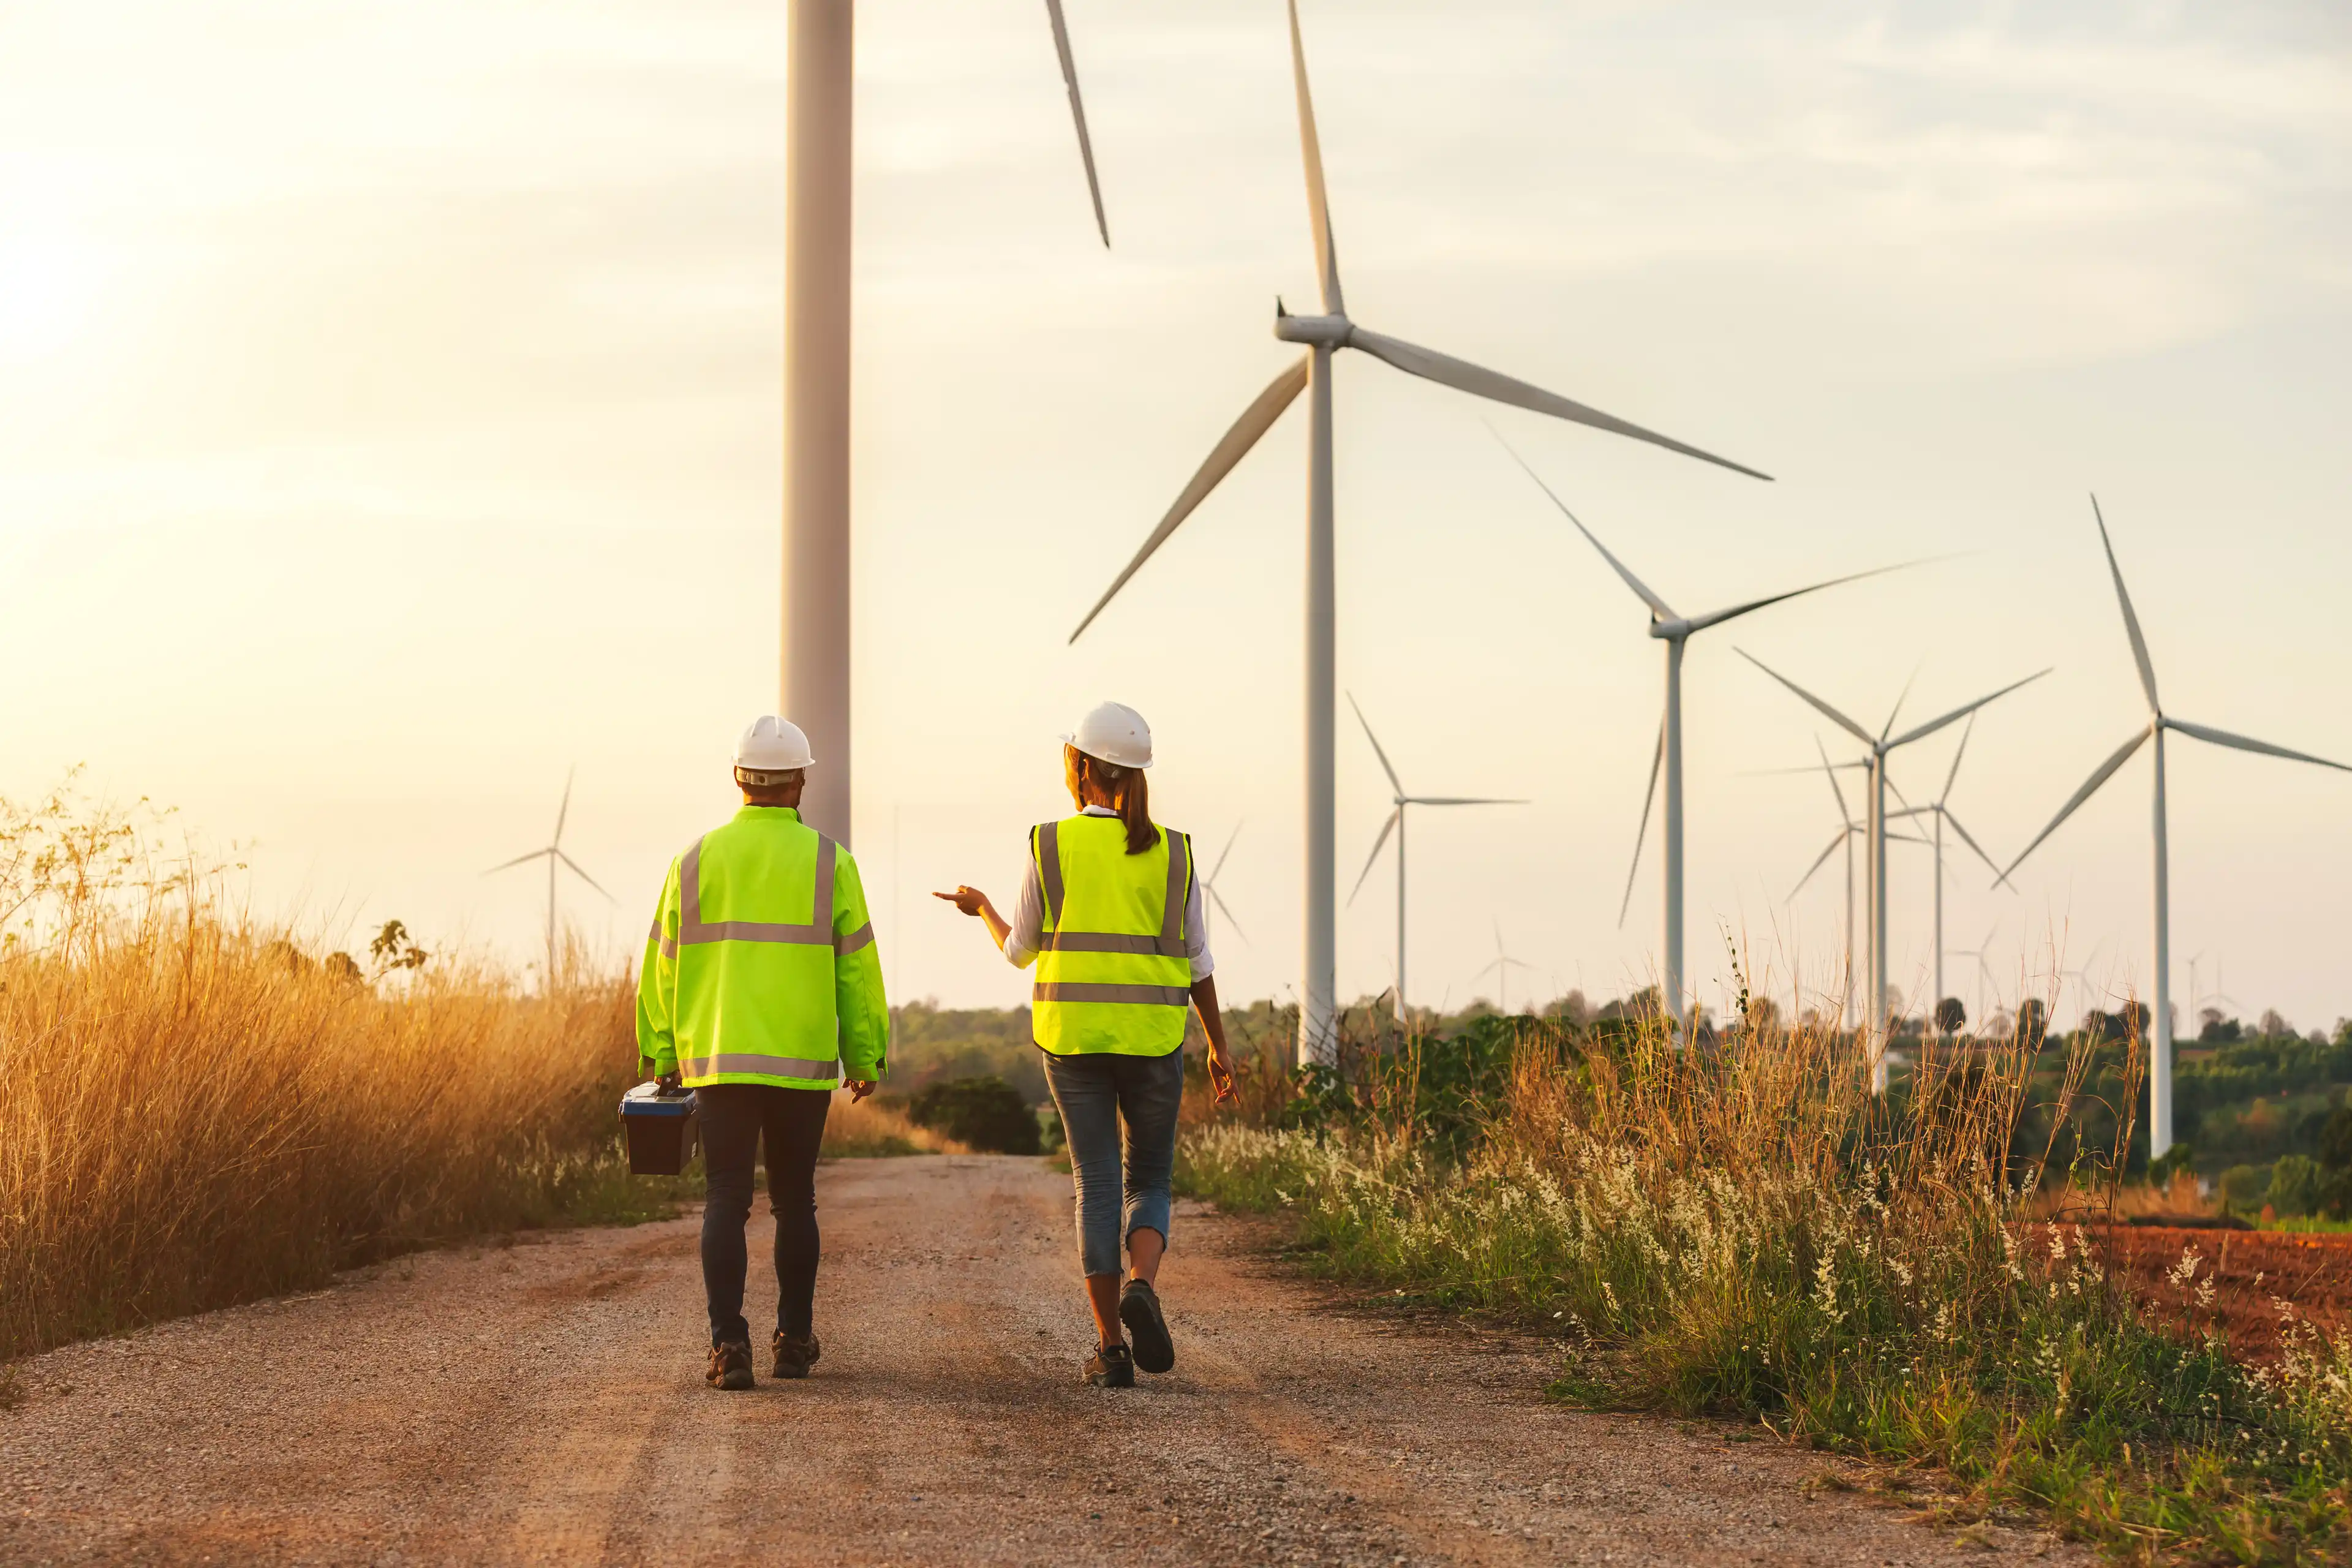 Two engineers walking through a Wind Farm